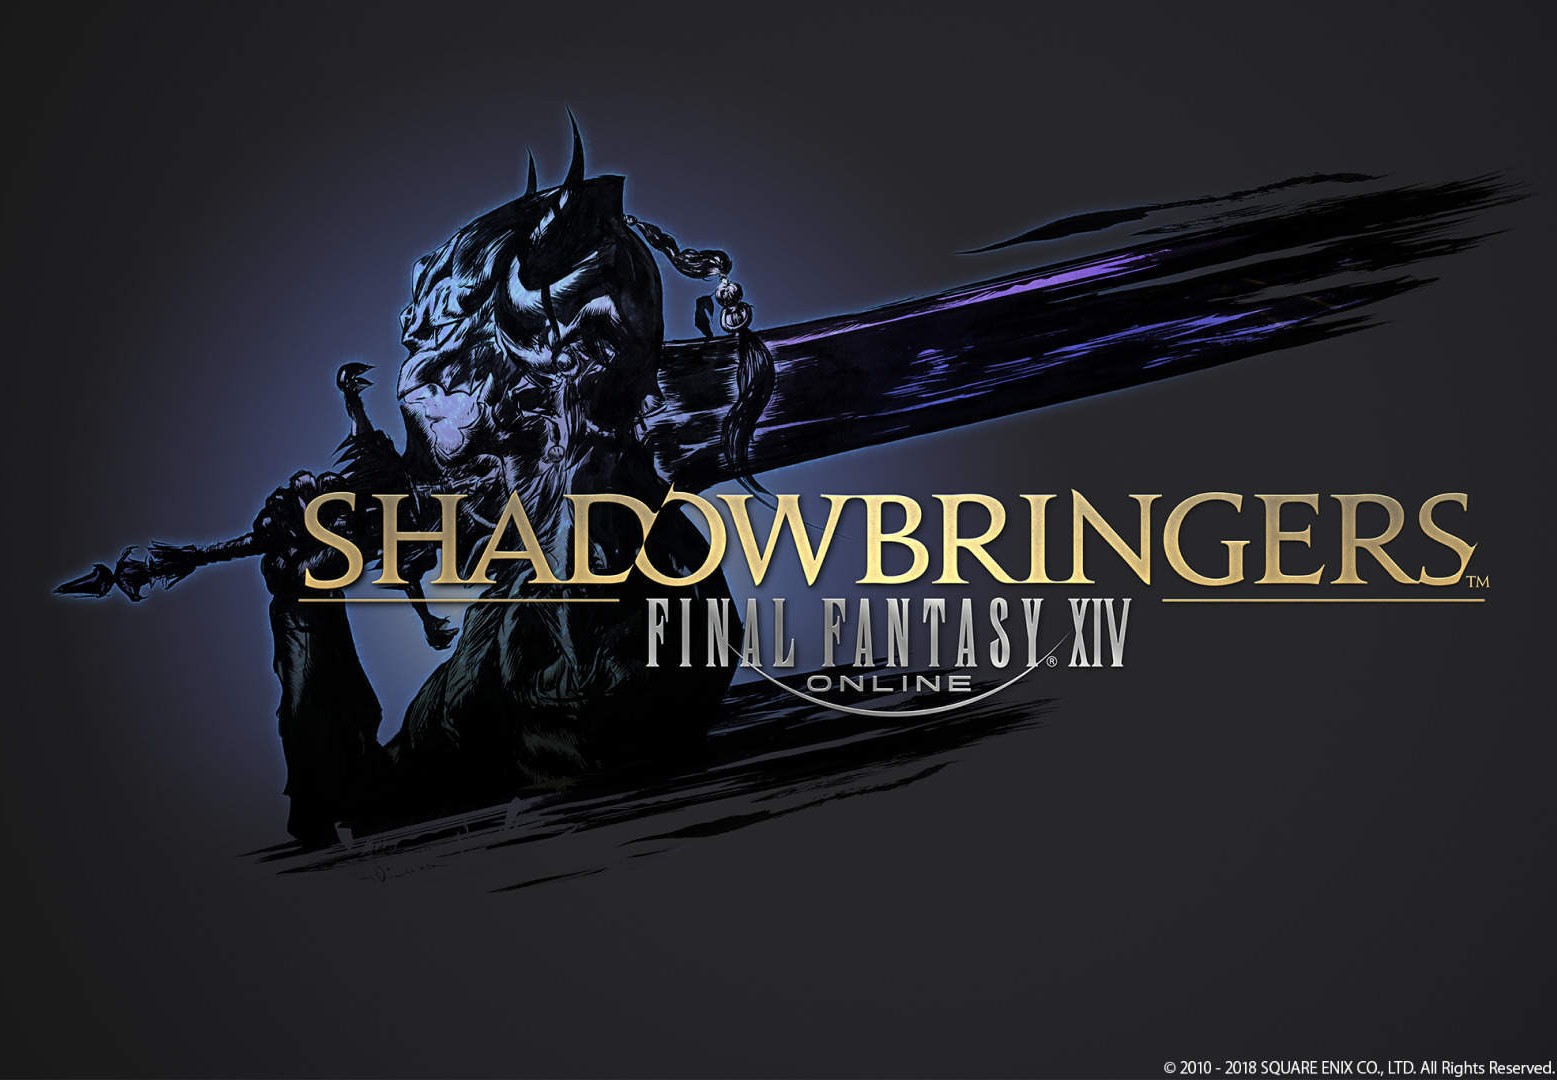 Final Fantasy XIV: Shadowbringers Standard Edition EU Digital Download CD Key